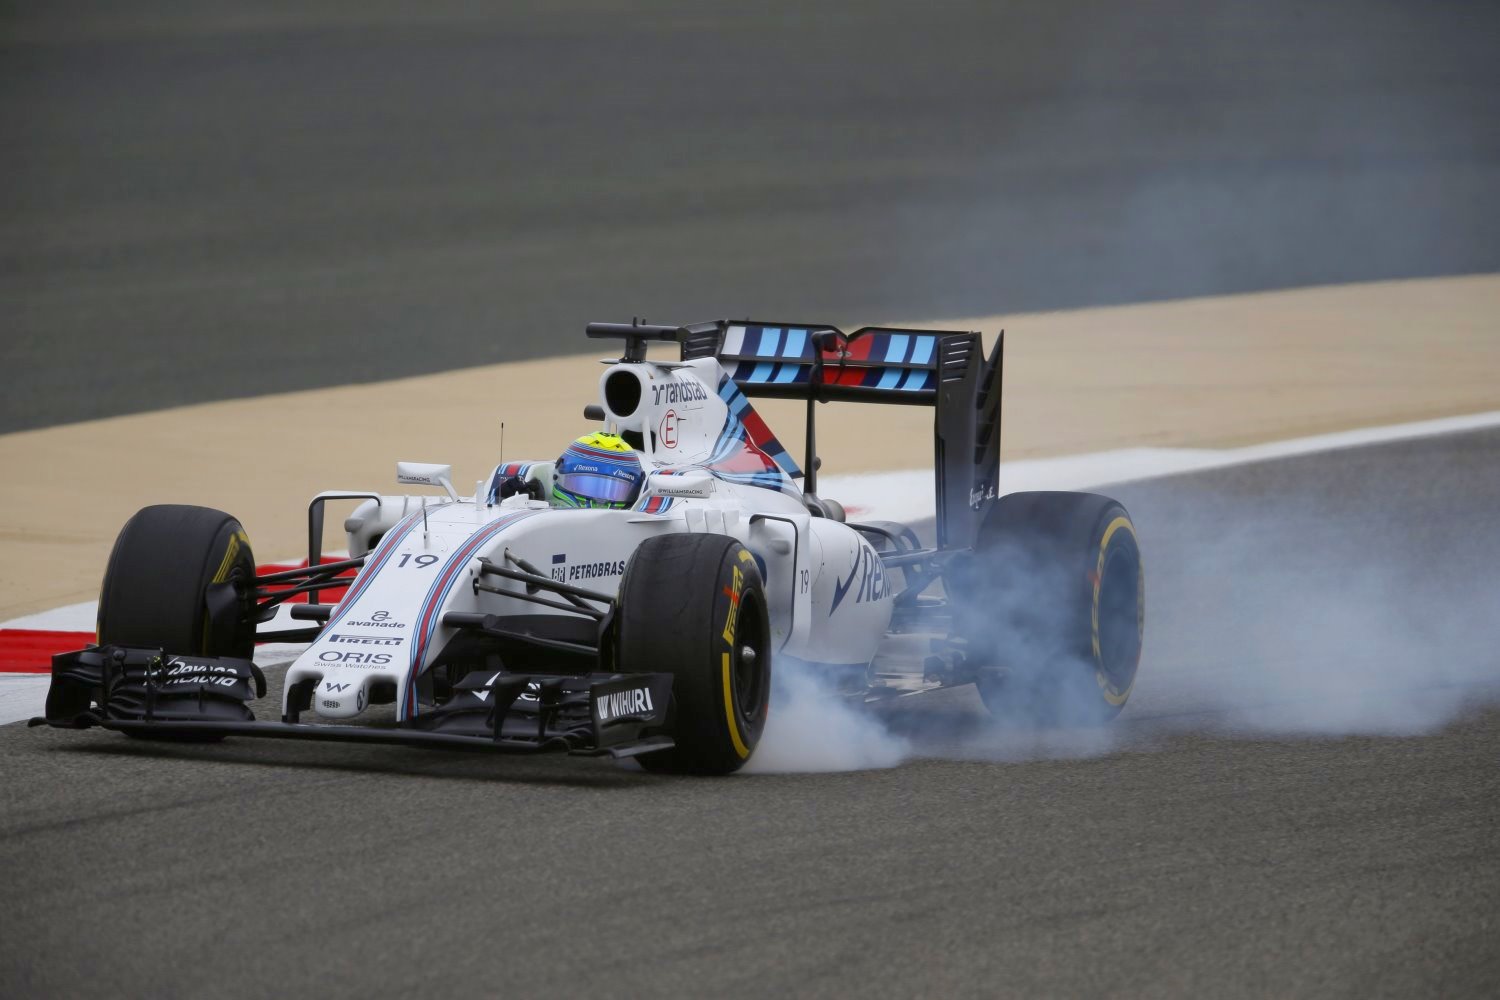 Massa locks a wheel in Bahrain